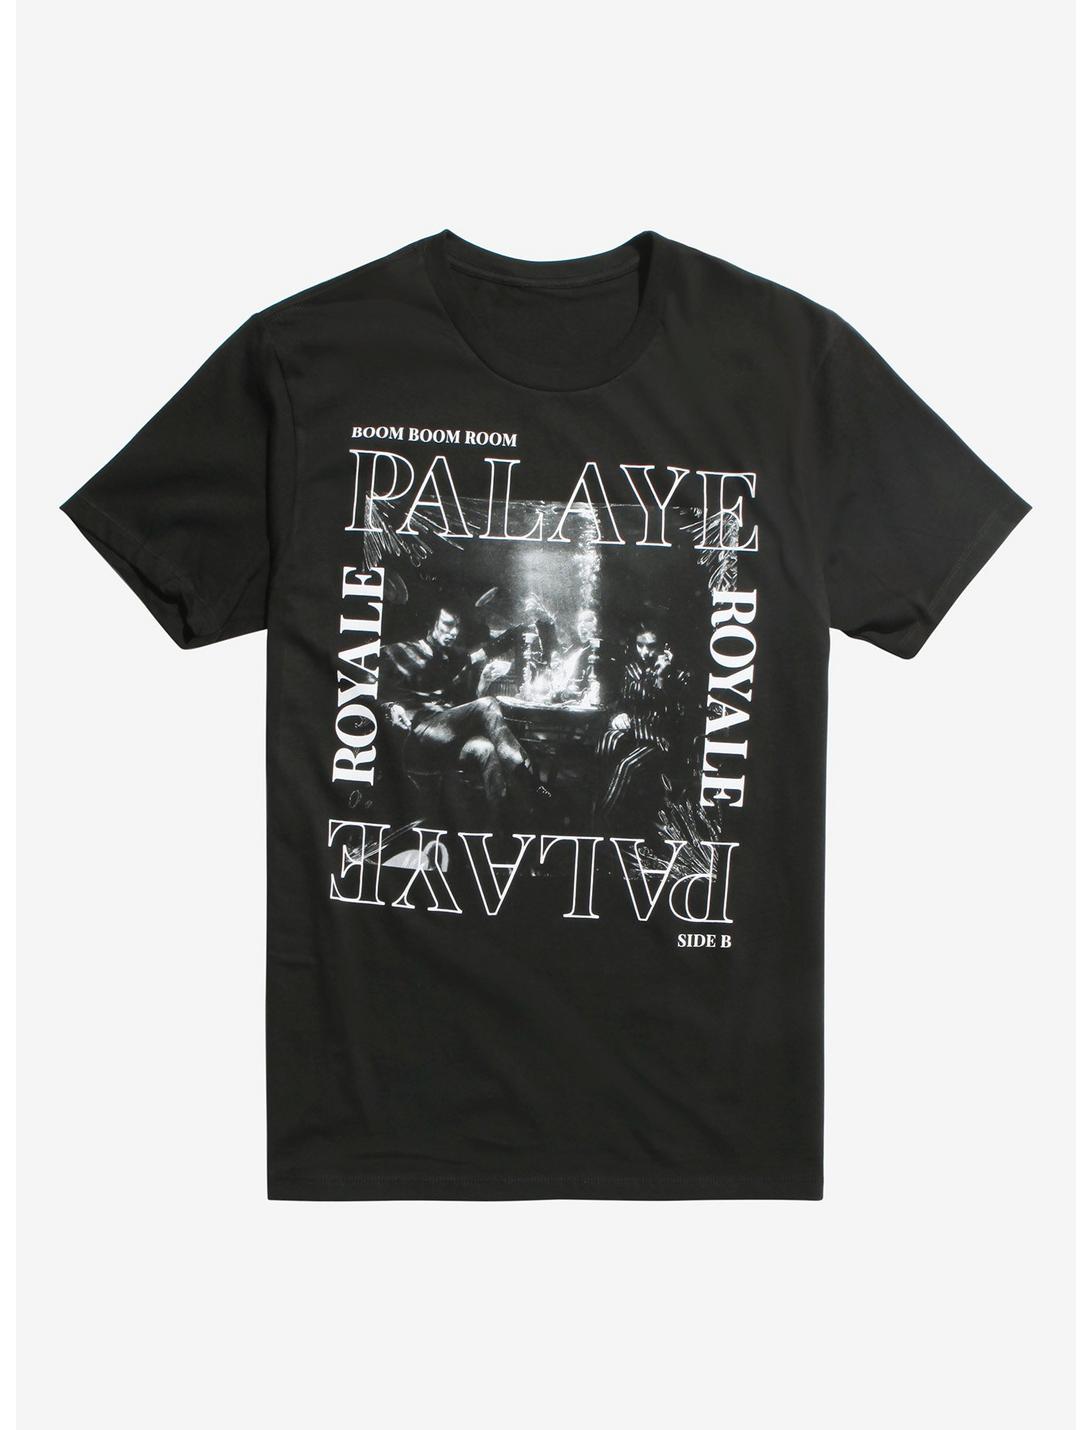 Palaye Royale Boom Boom Room T-Shirt, BLACK, hi-res